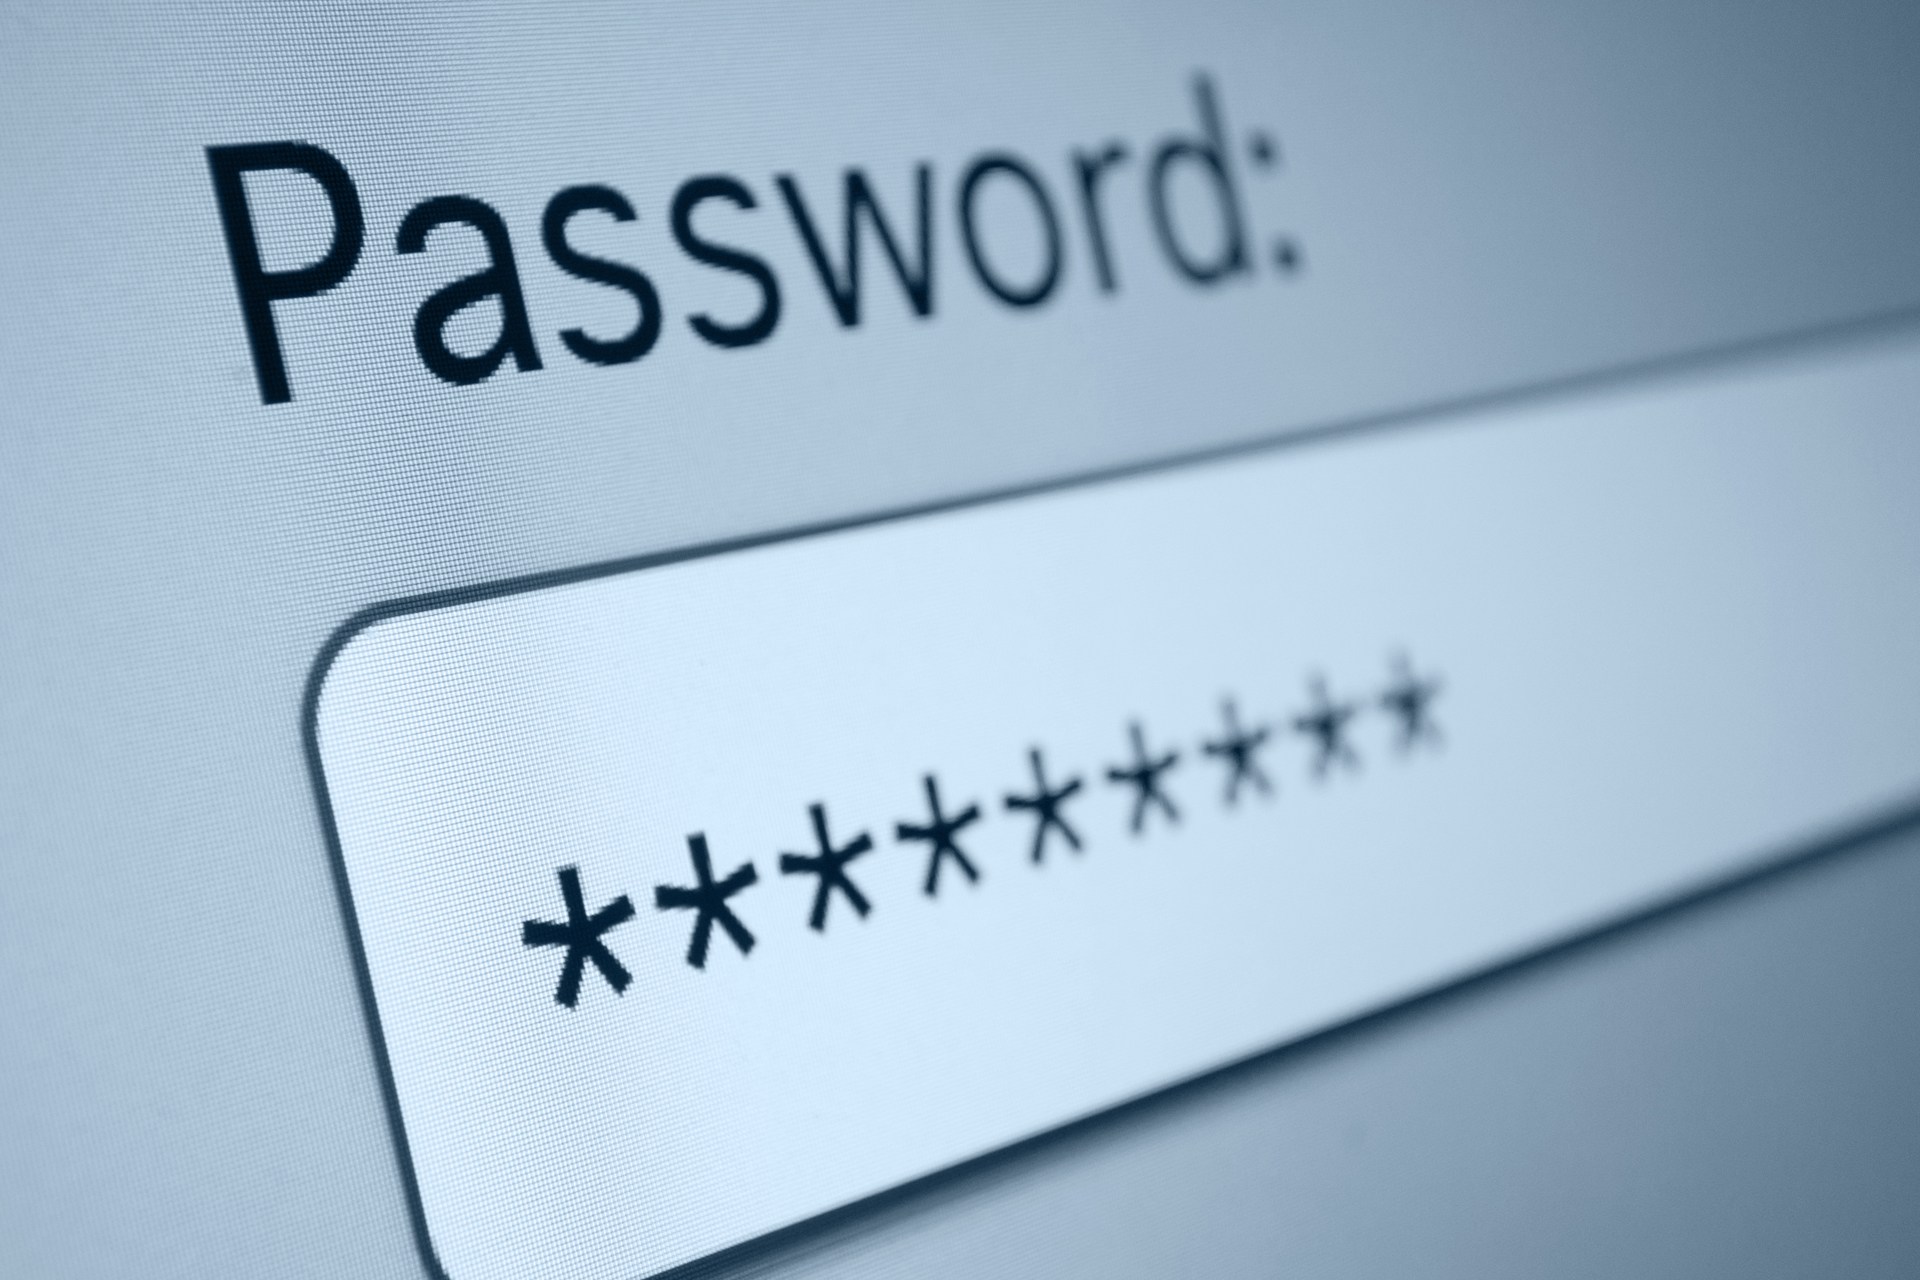 People still use pathetic passwords